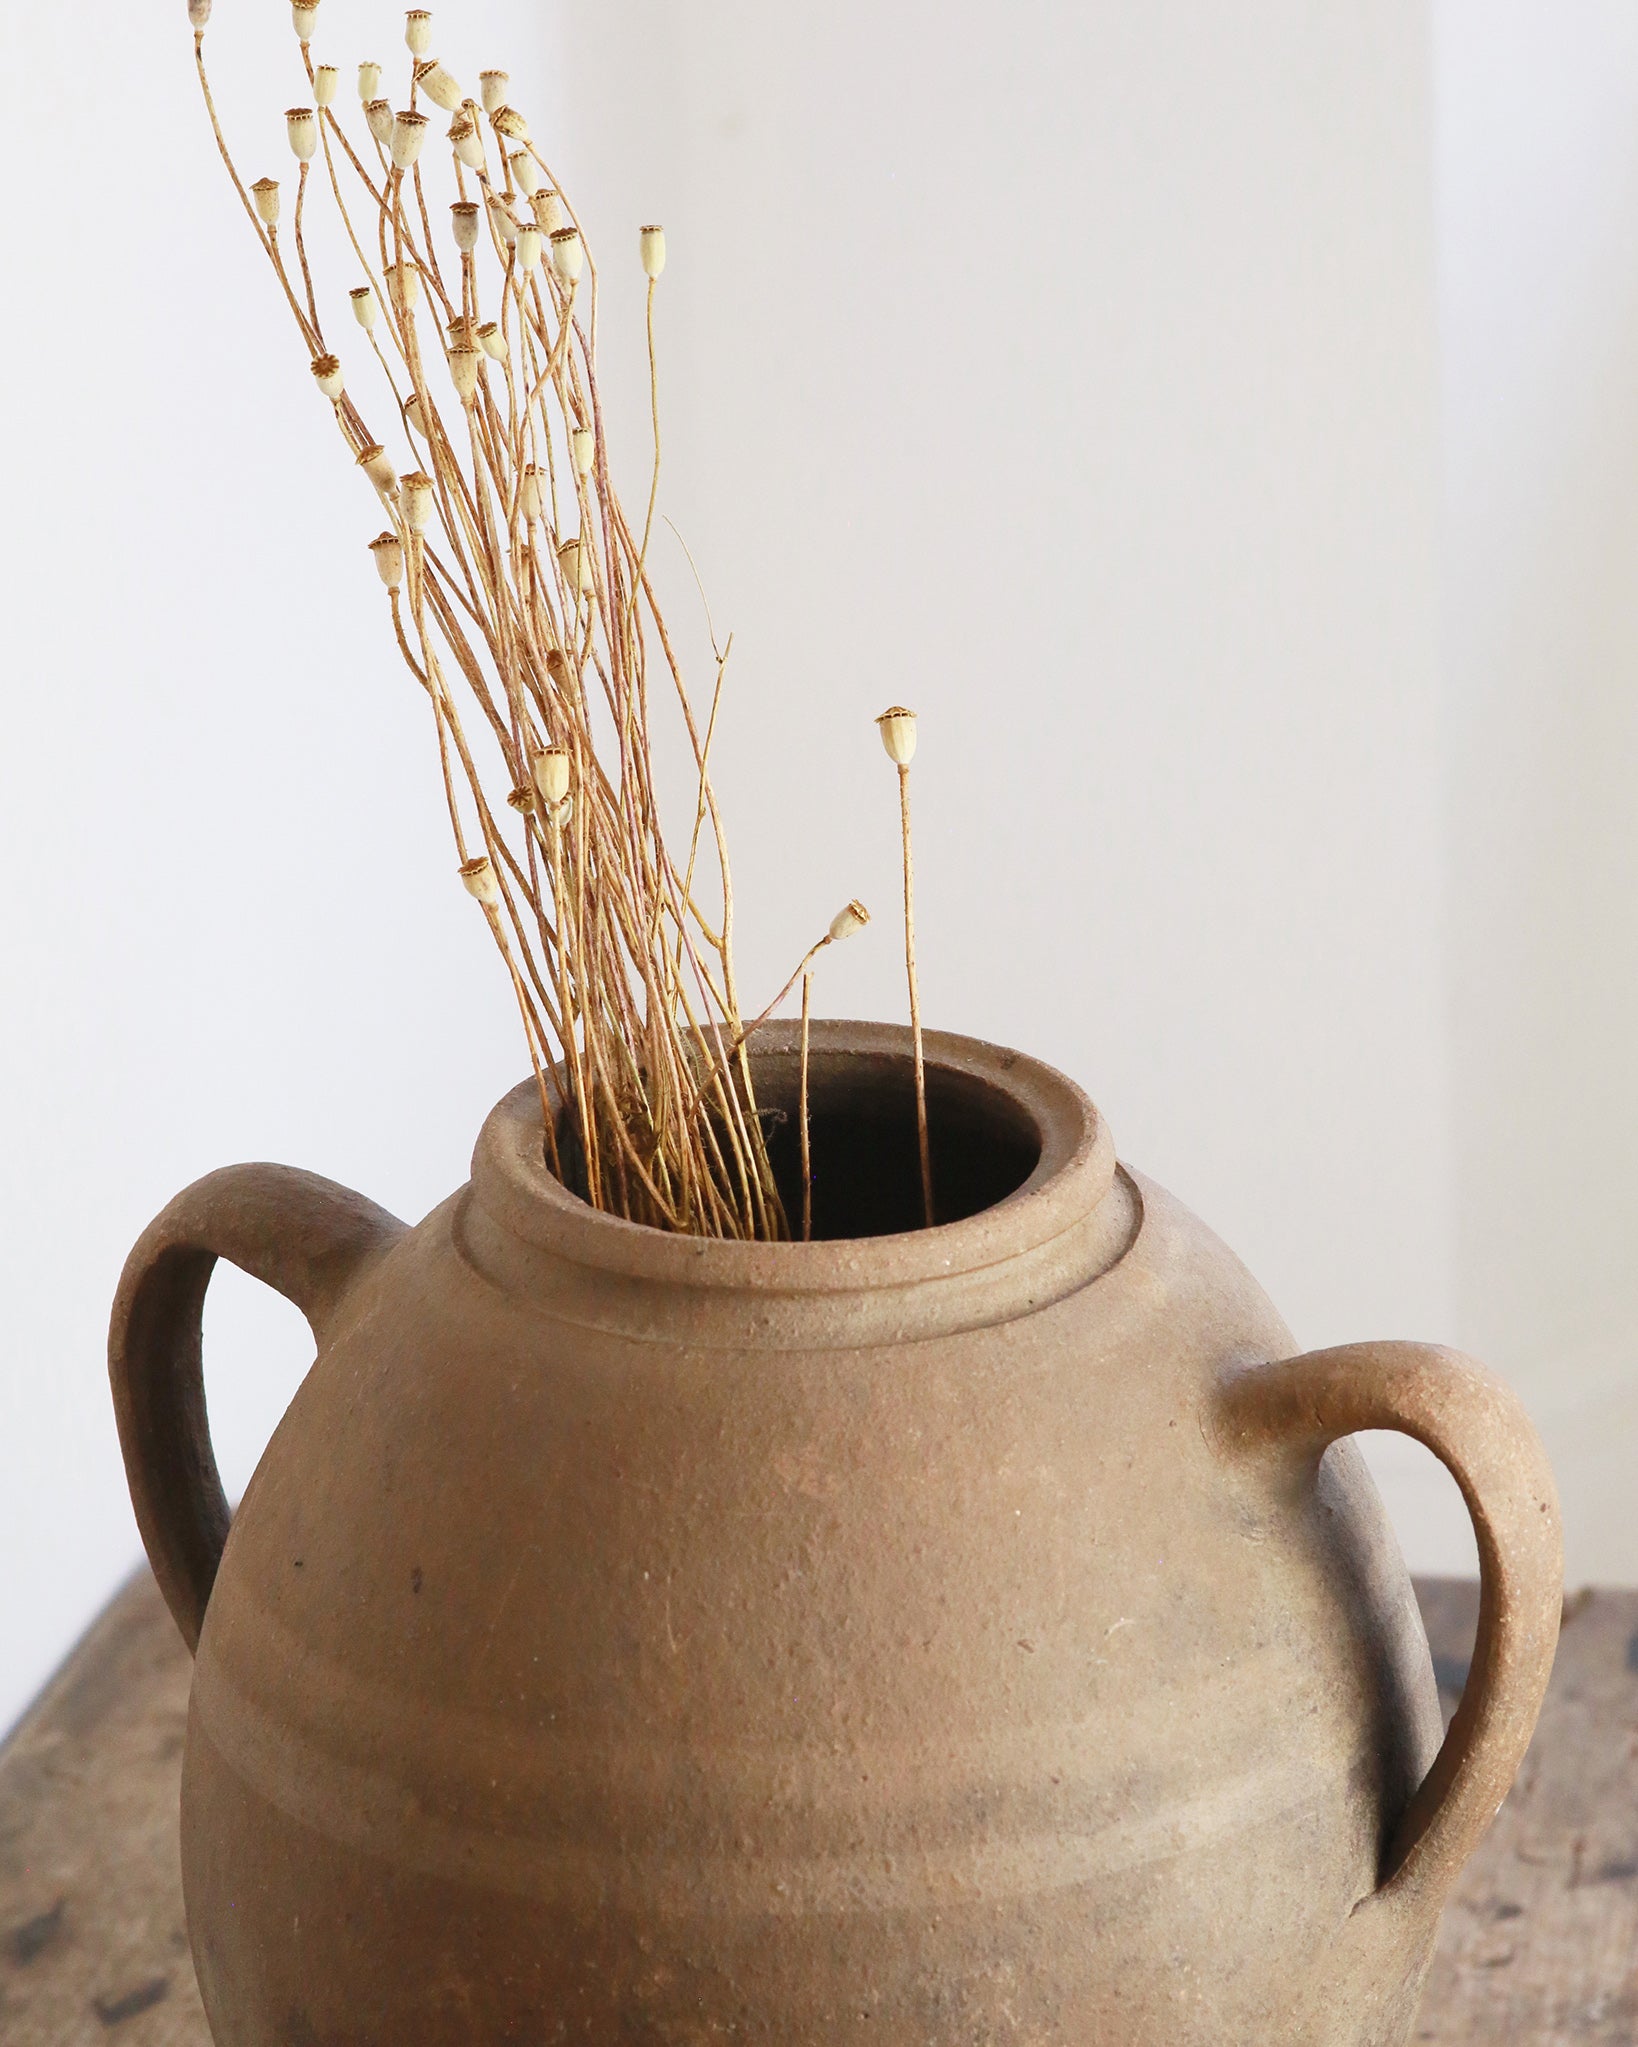 Antique terracotta Mediterranean pot with dried stems